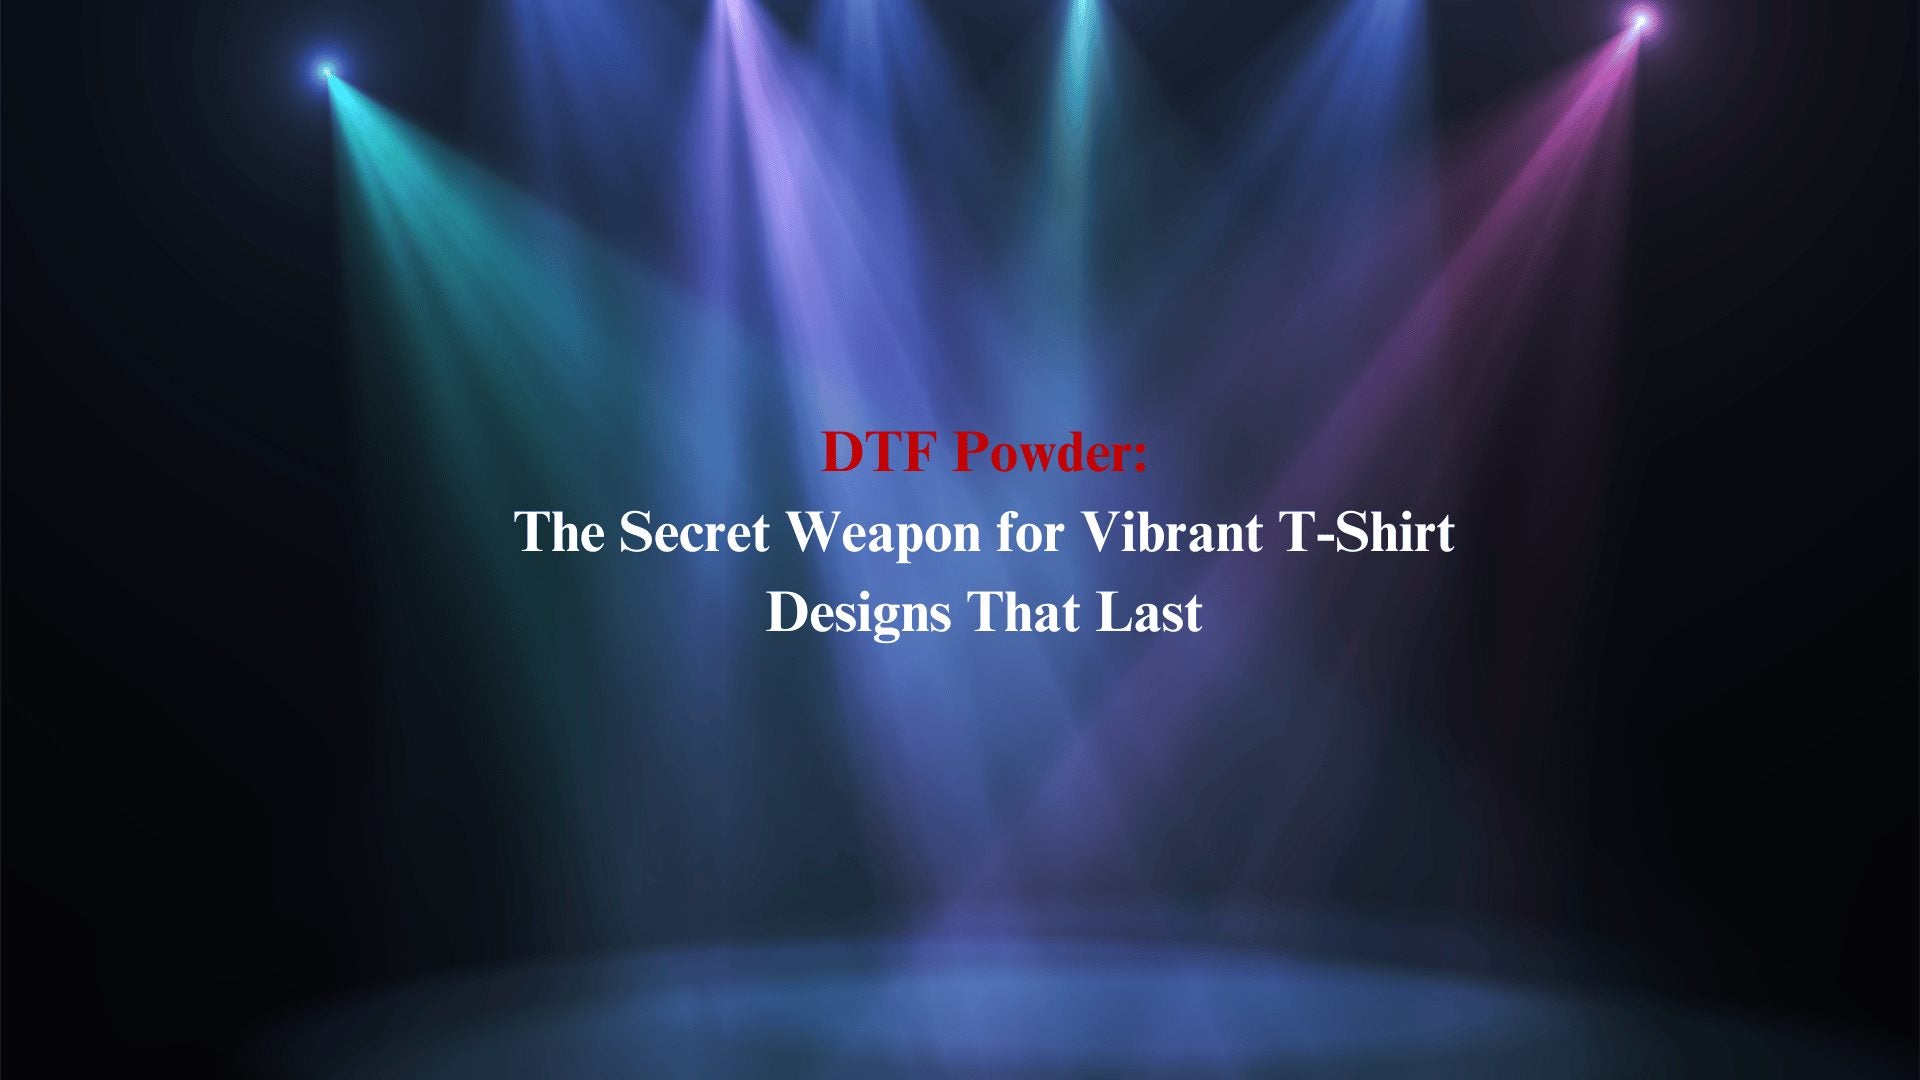 DTF Powder: The Secret Weapon for Vibrant T-Shirt Designs That Last